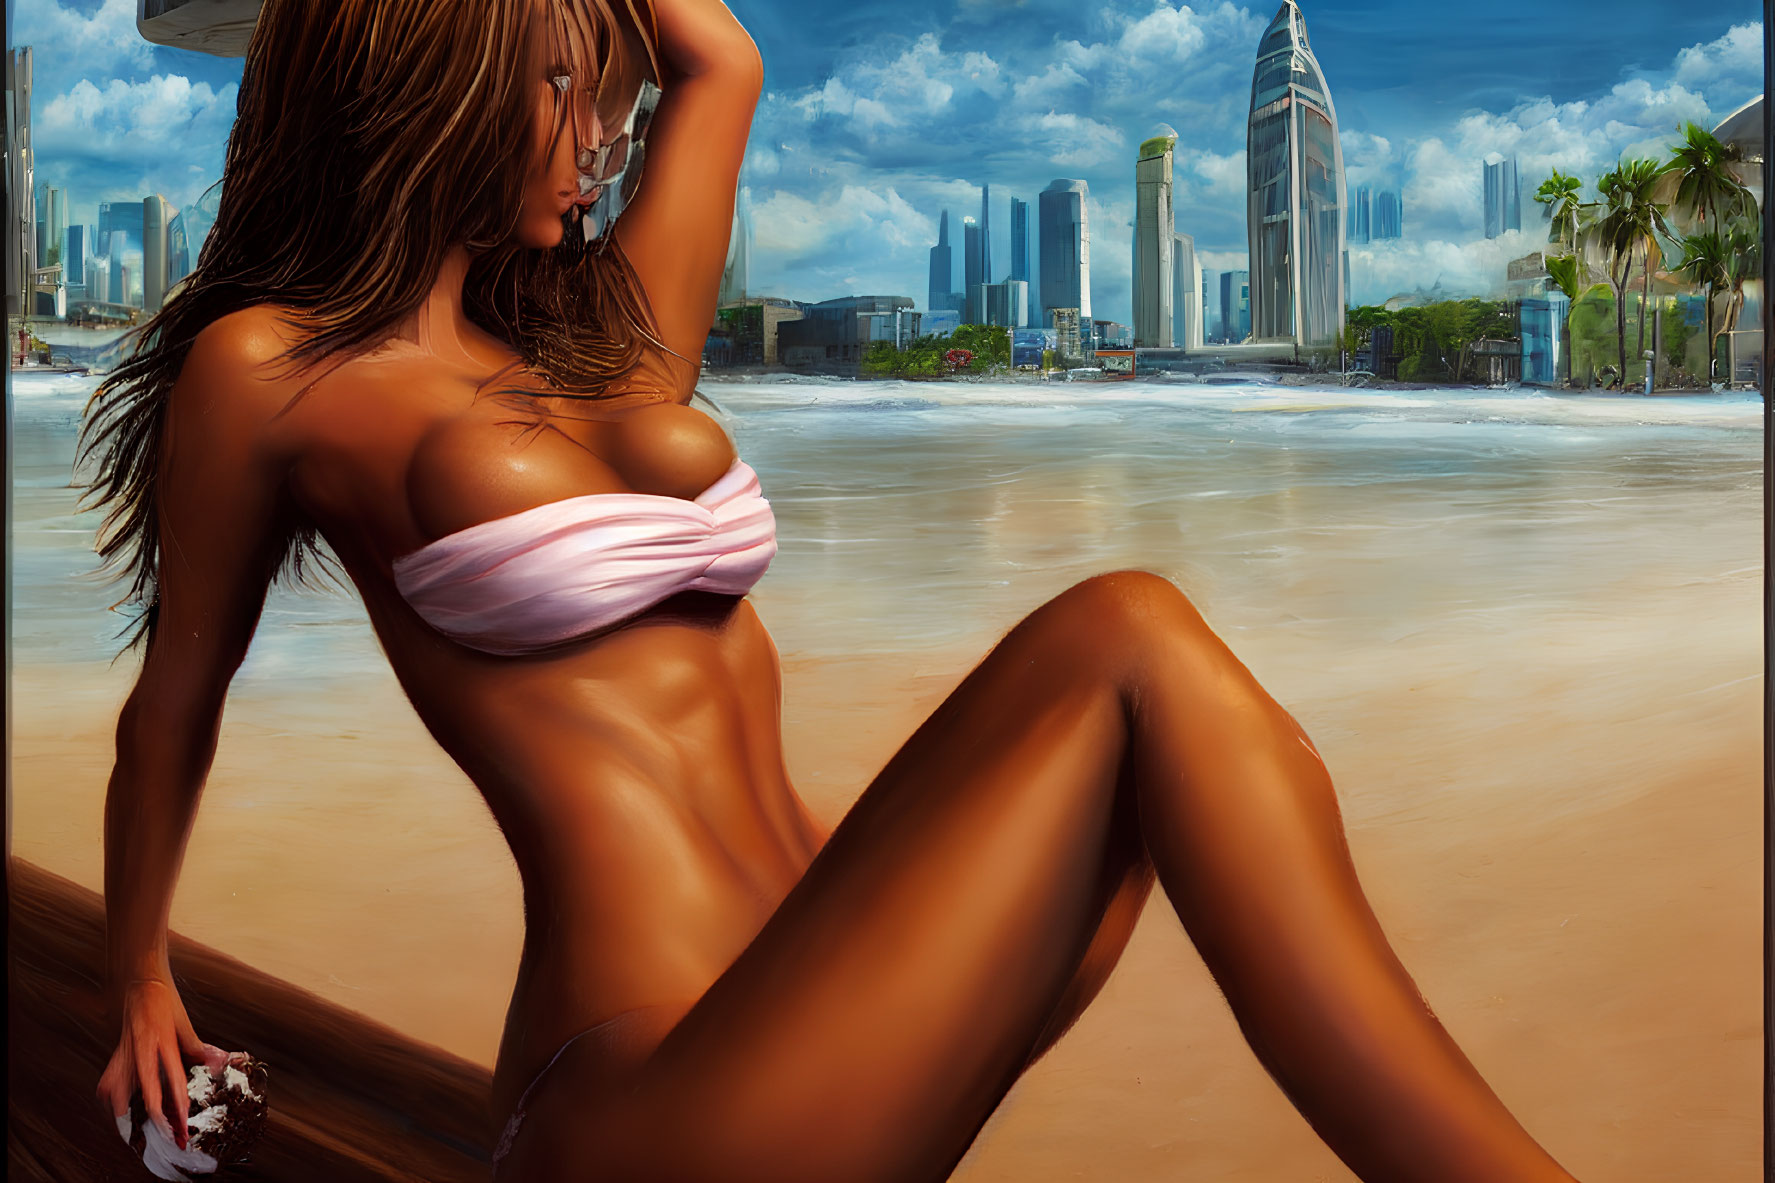 Digital artwork of woman in bikini on beach with skyscrapers backdrop